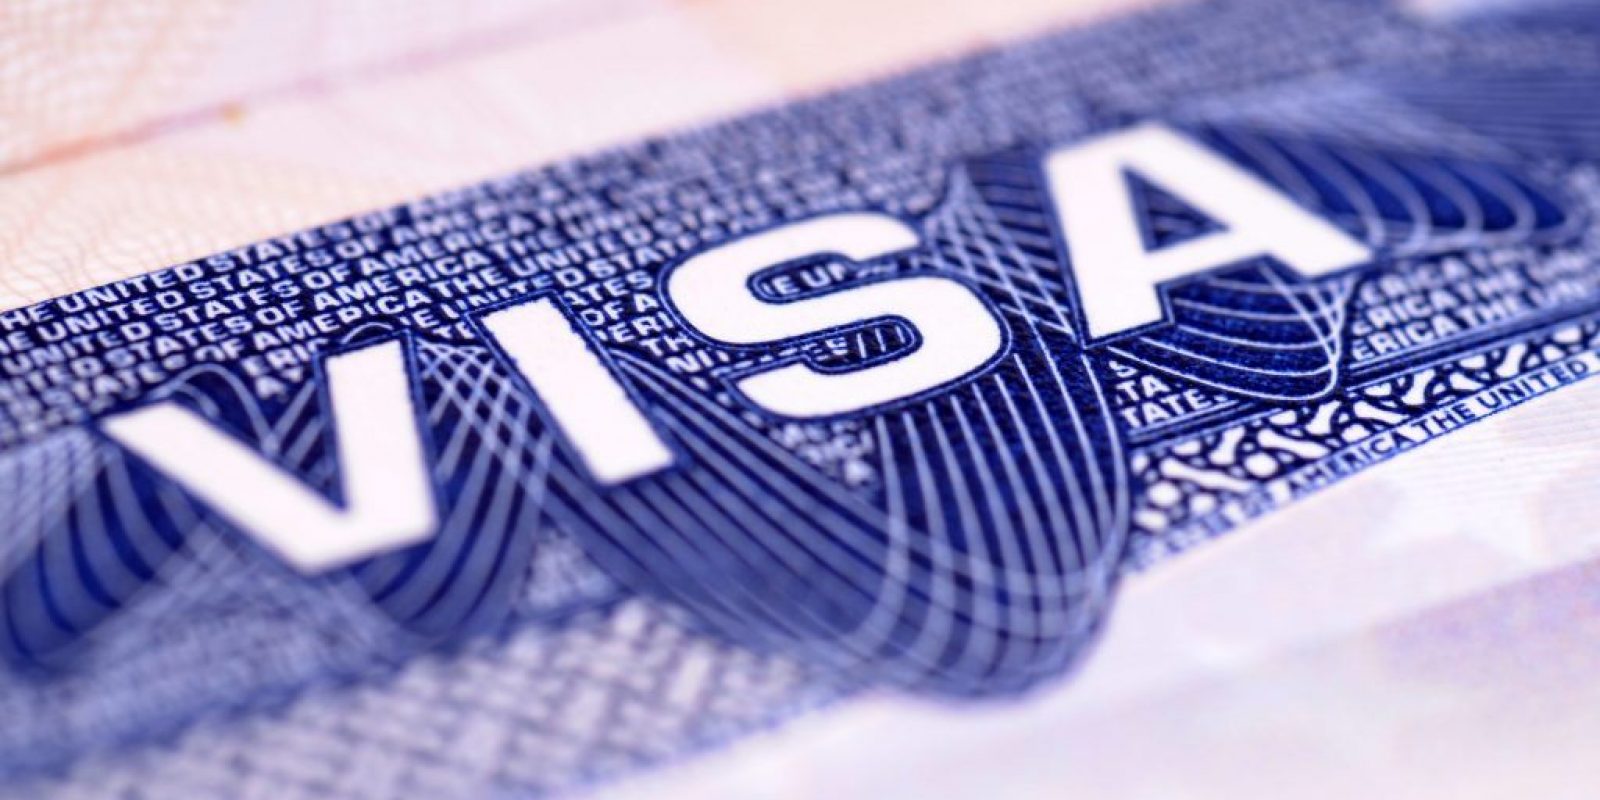 Closeup detail of a US visa document.